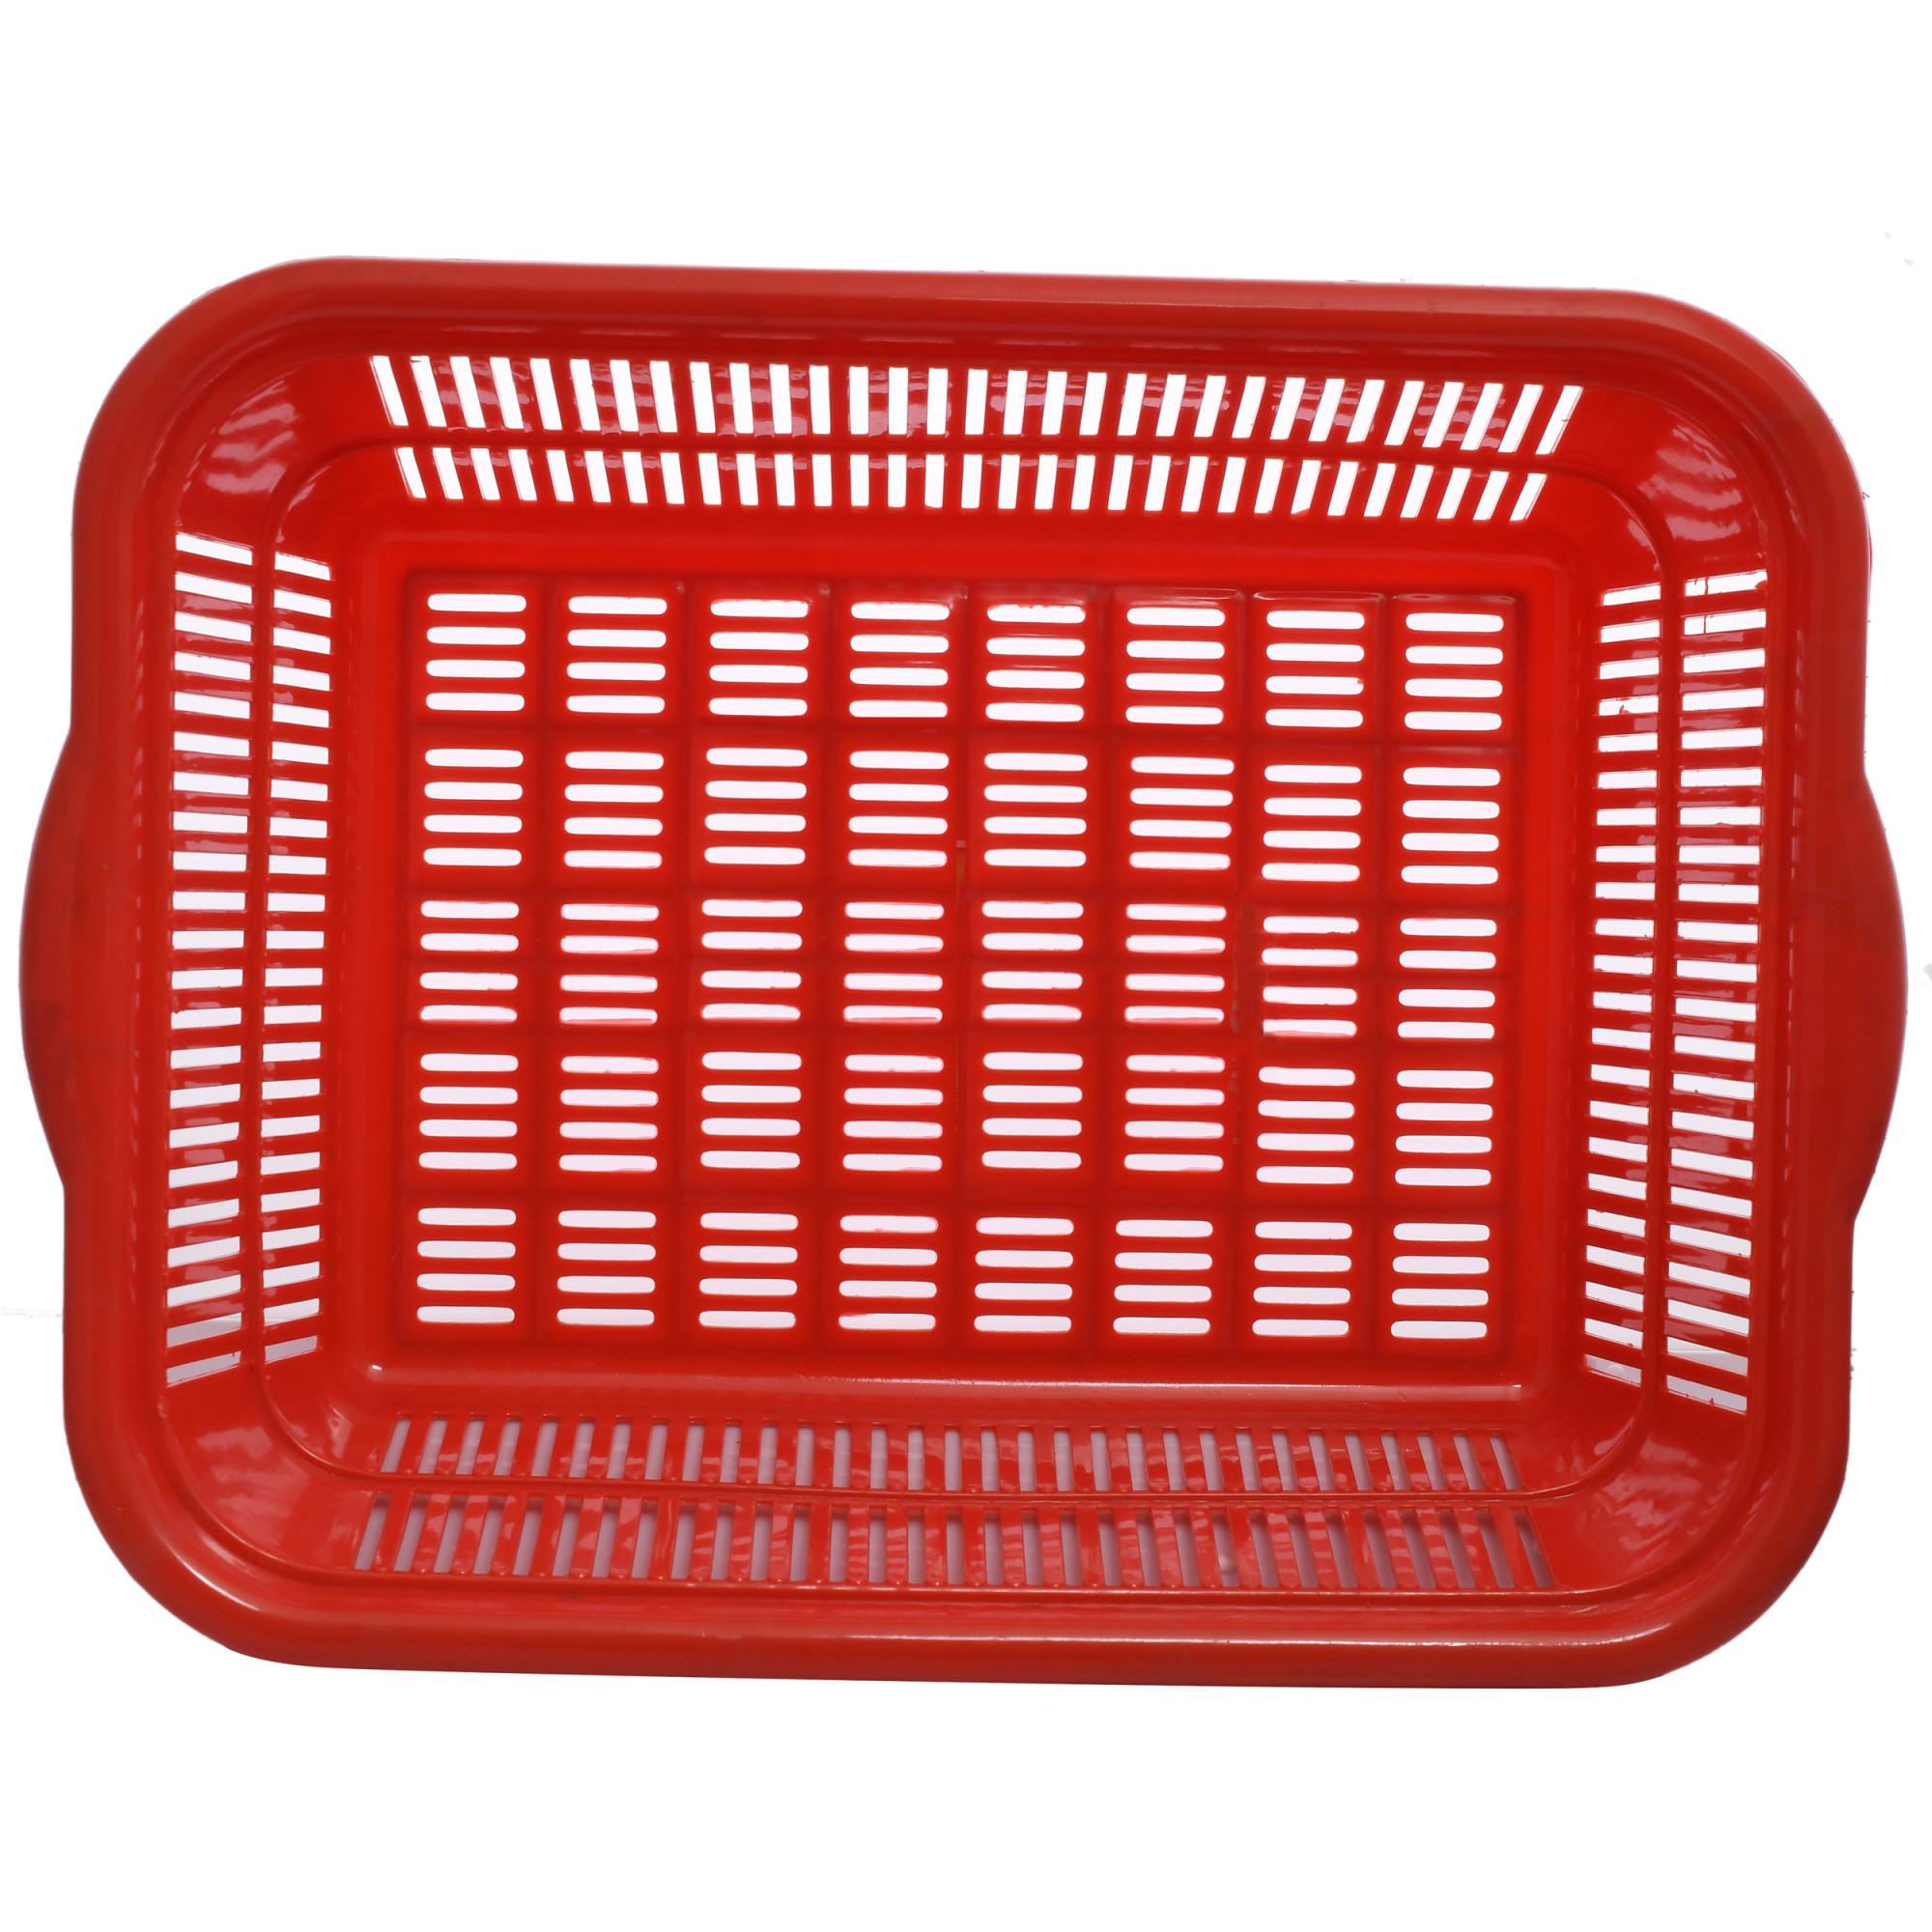 Kuber Industries Plastic Kitchen Small Size Dish Rack Drainer Vegetables And Fruits Washing Basket Dish Rack Multipurpose Organizers (Red)-KUBMART578